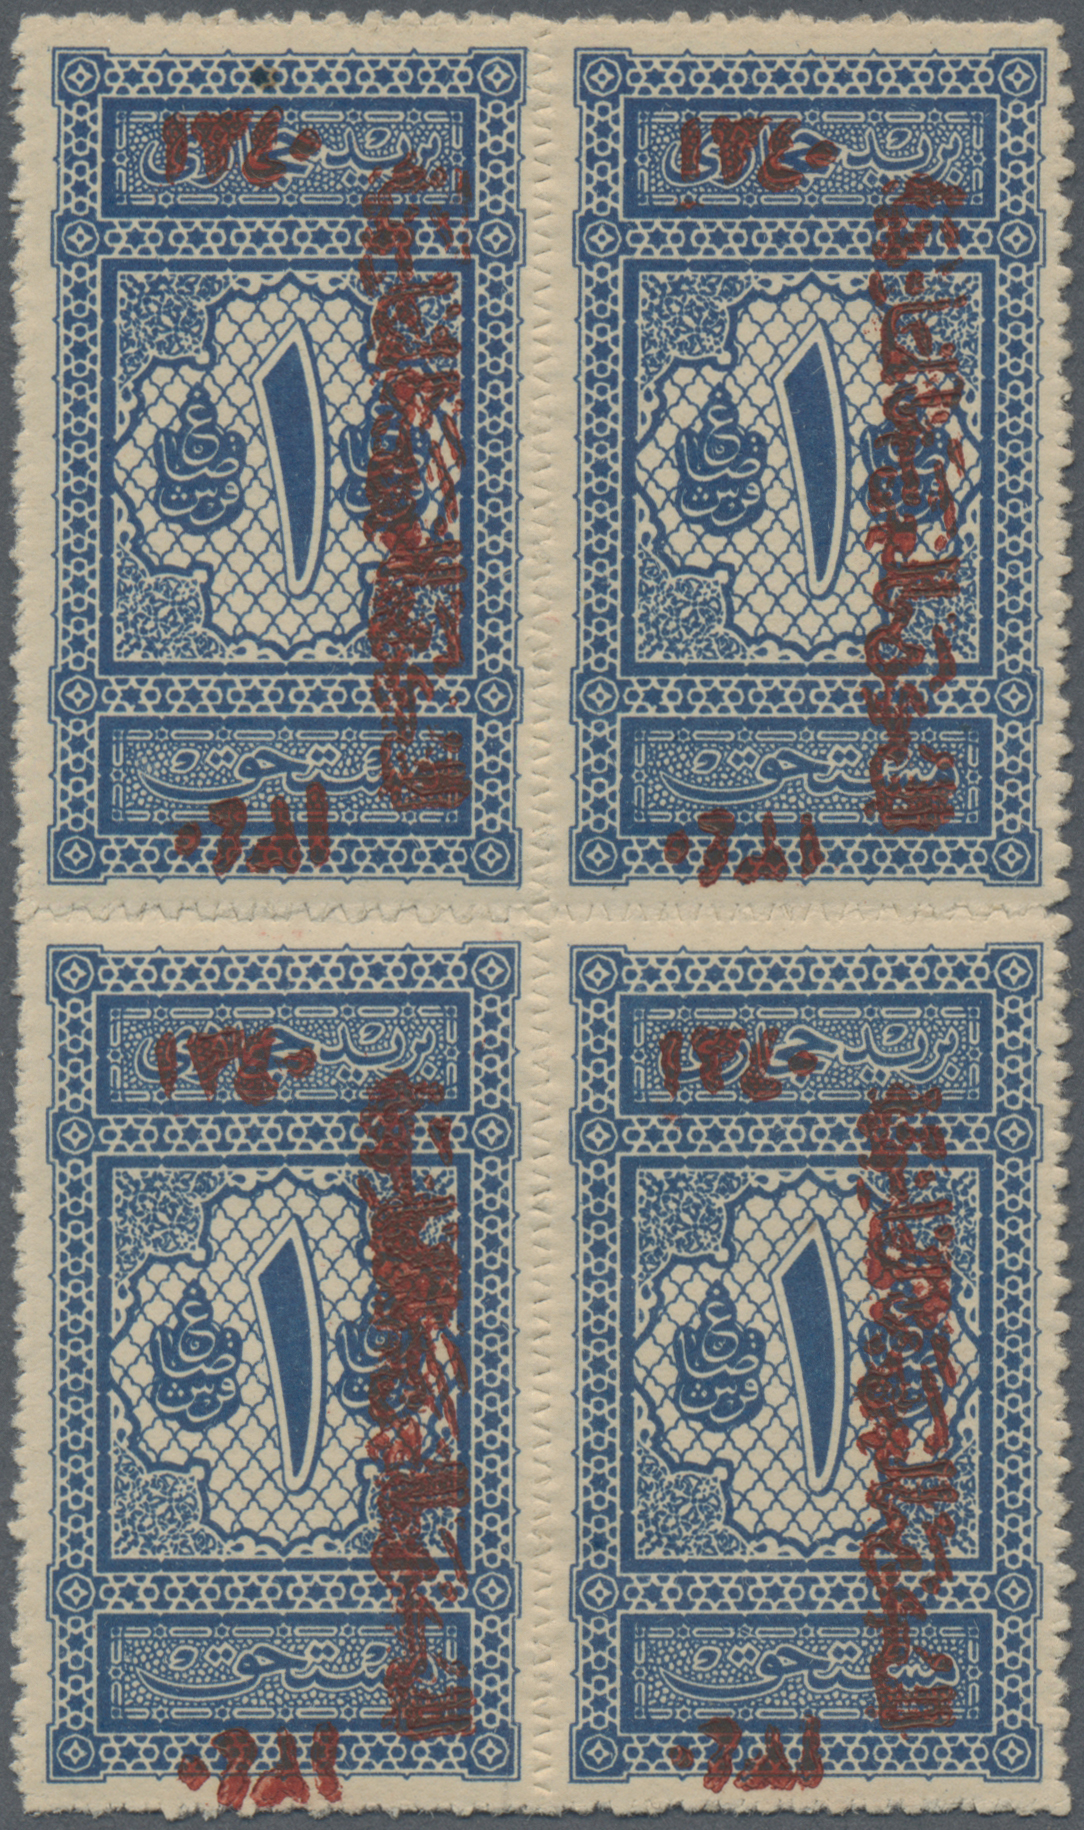 Lot 02522 - Saudi-Arabien - Hedschas - Portomarken  -  Auktionshaus Christoph Gärtner GmbH & Co. KG 56th AUCTION - Day 2